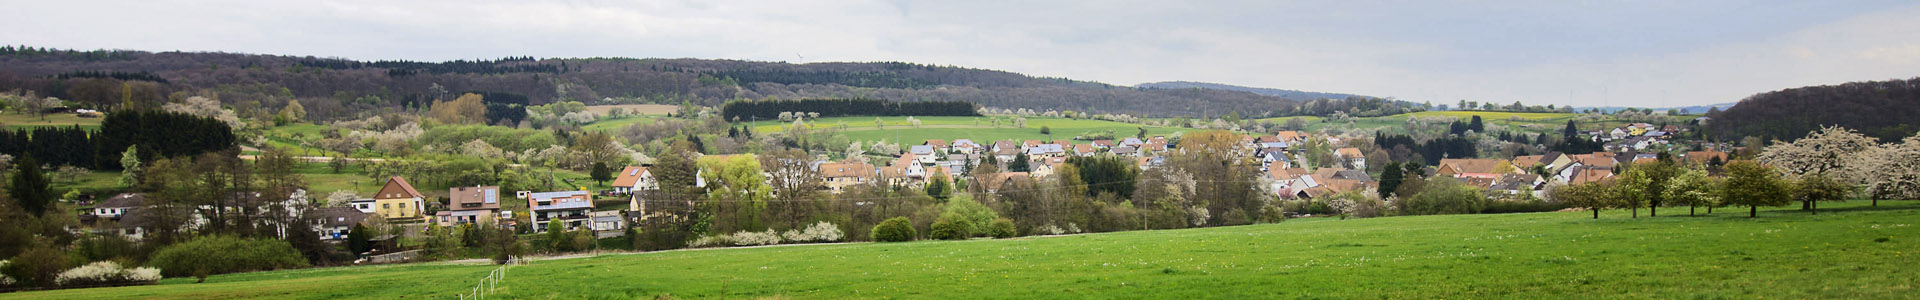 Panorama Ortsgemeinde Frohnhofen